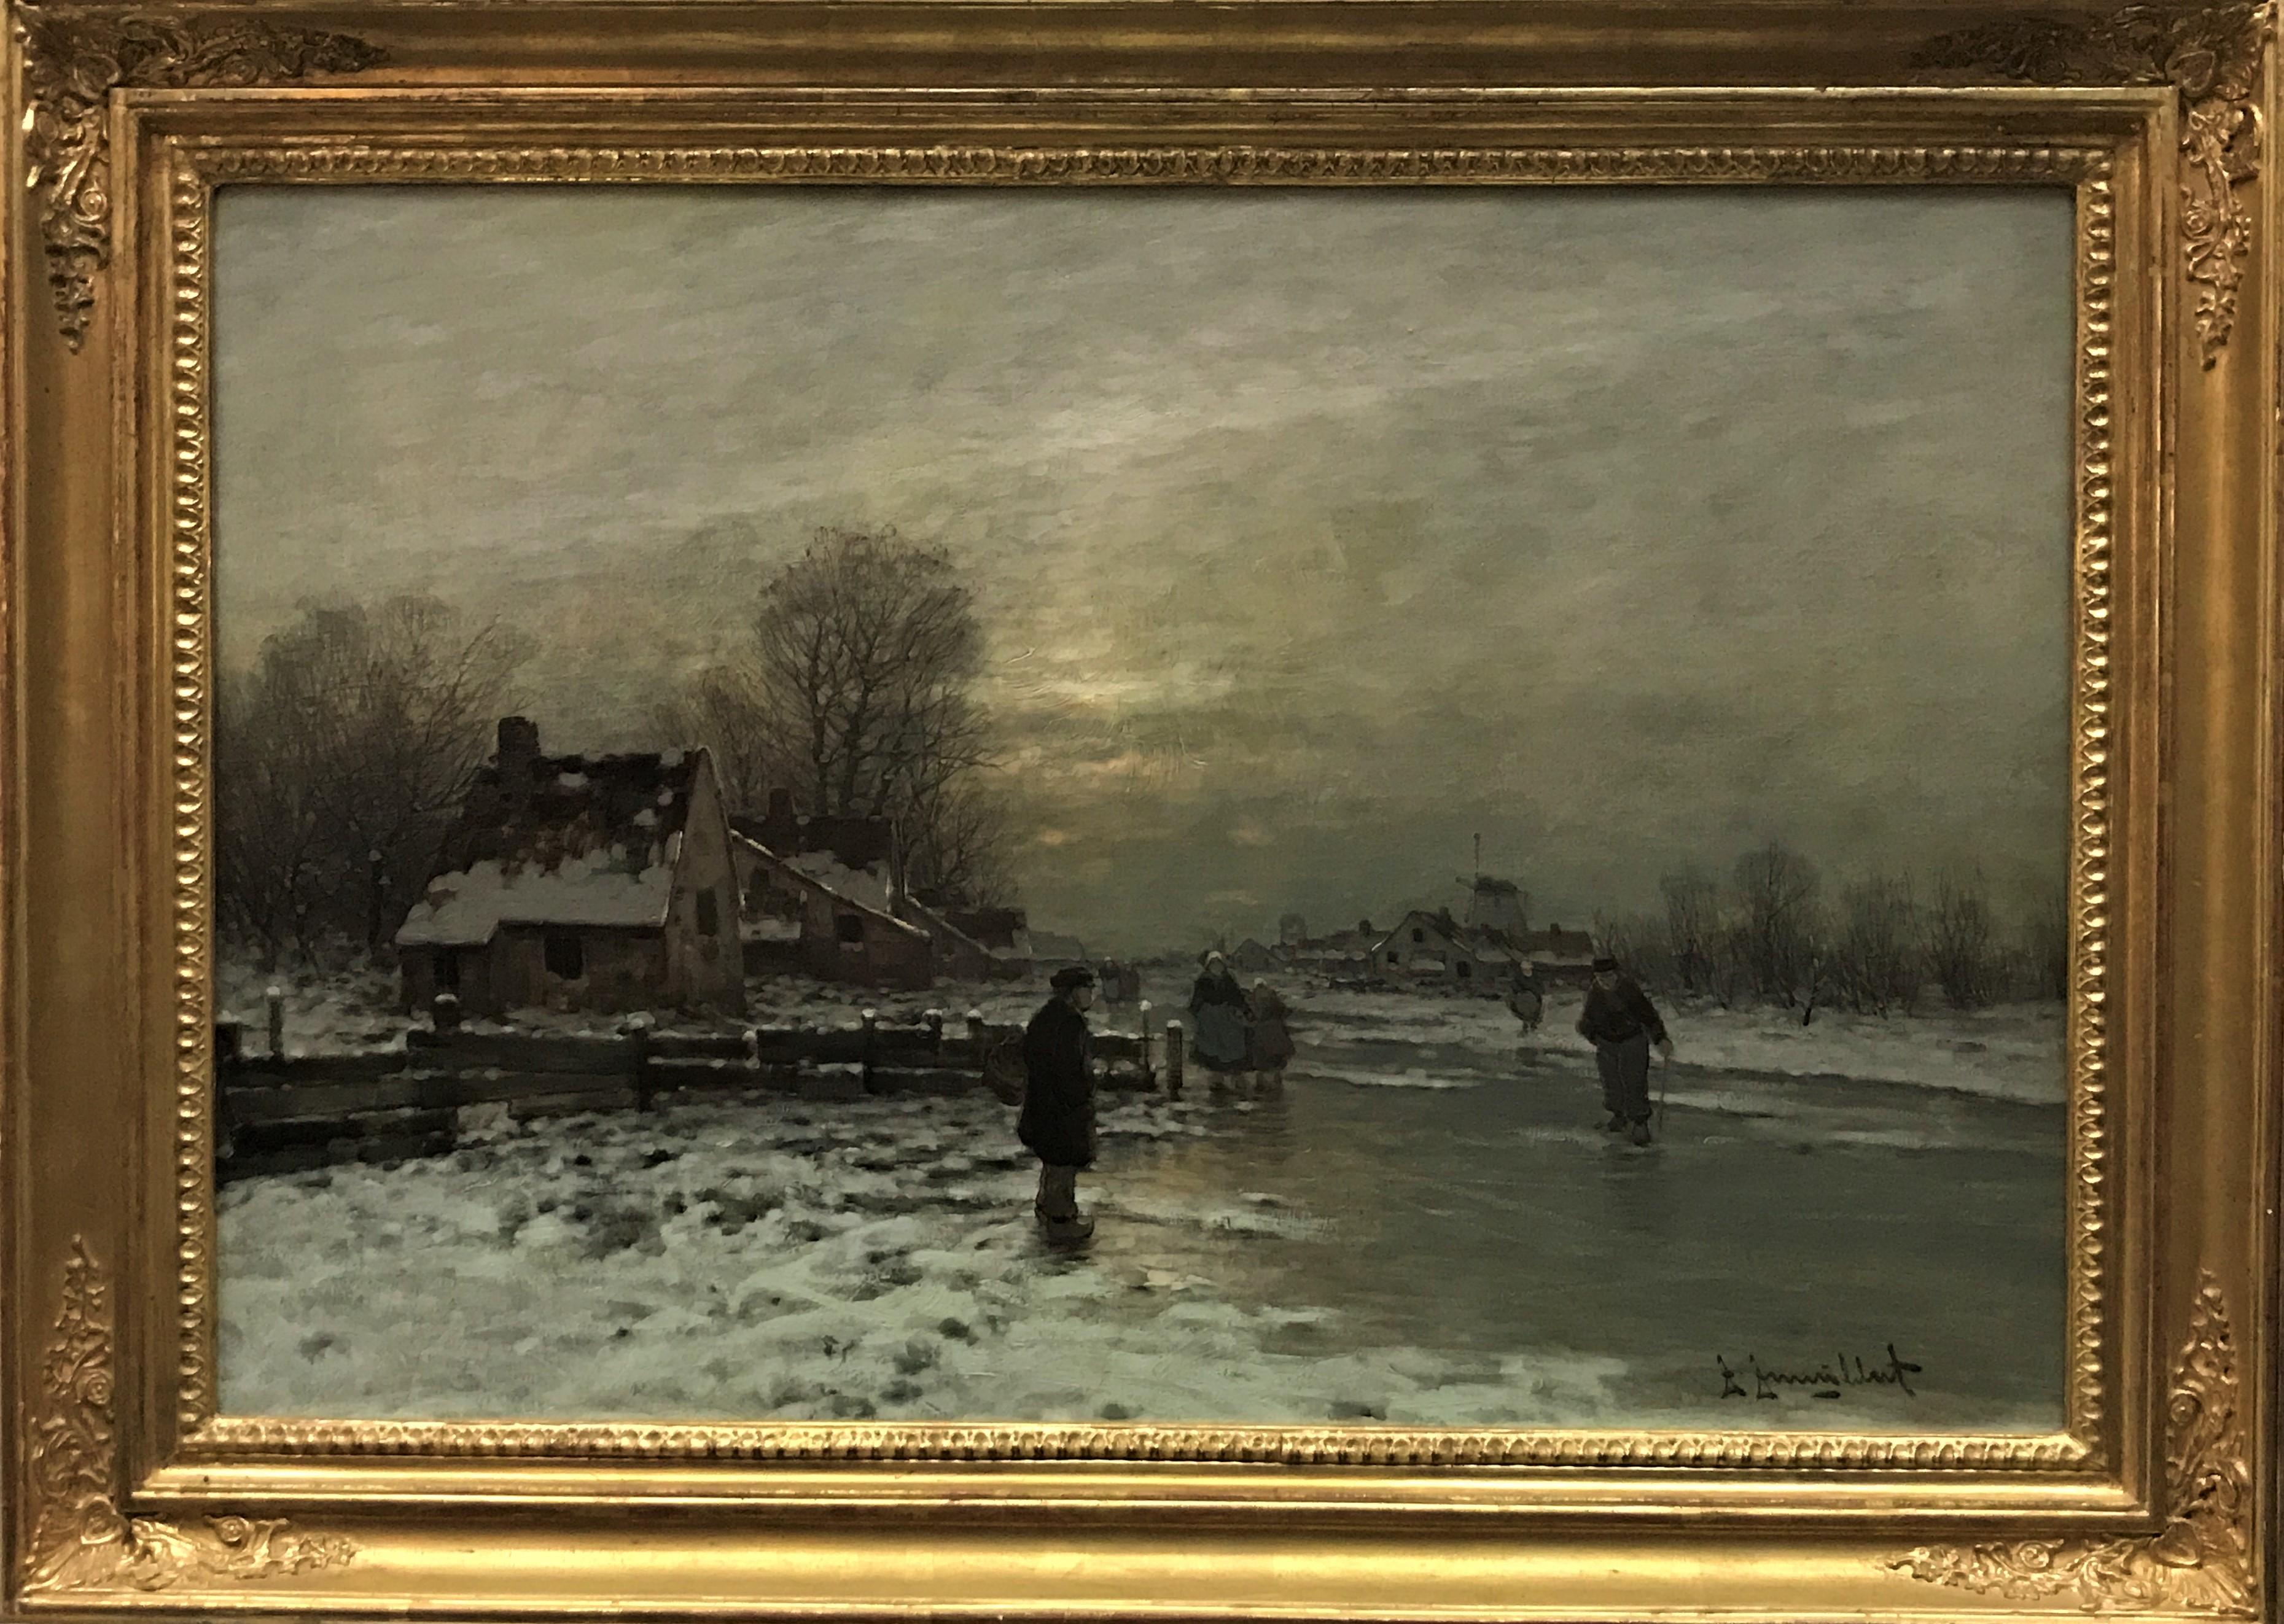 Winter Day, Dutch landscape, Figures, original oil on canvas, 19thC German  - Painting by Johann Jungblut